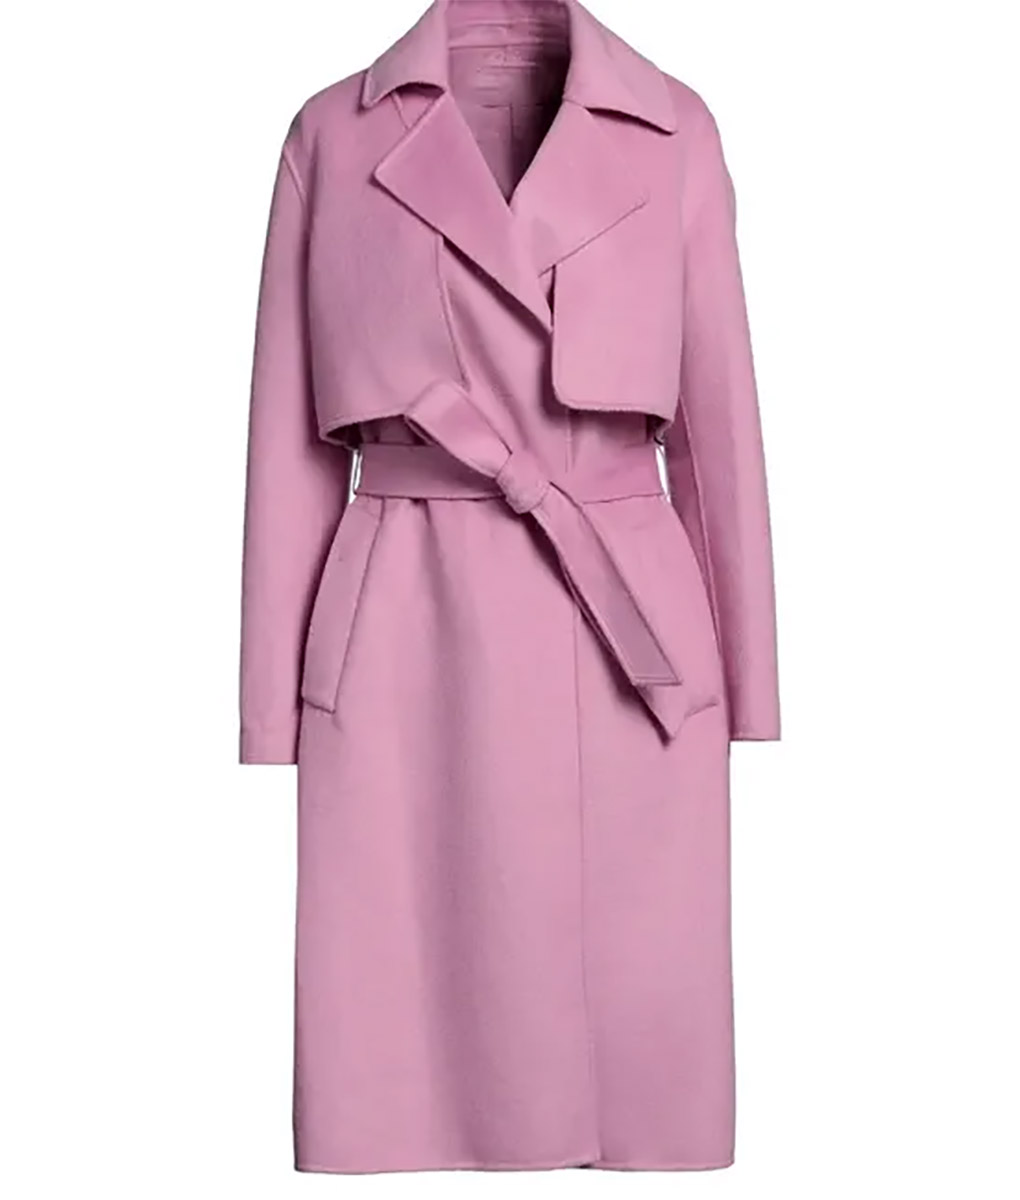 Lauren Elliott Crimes of Fashion Pink Coat (4)